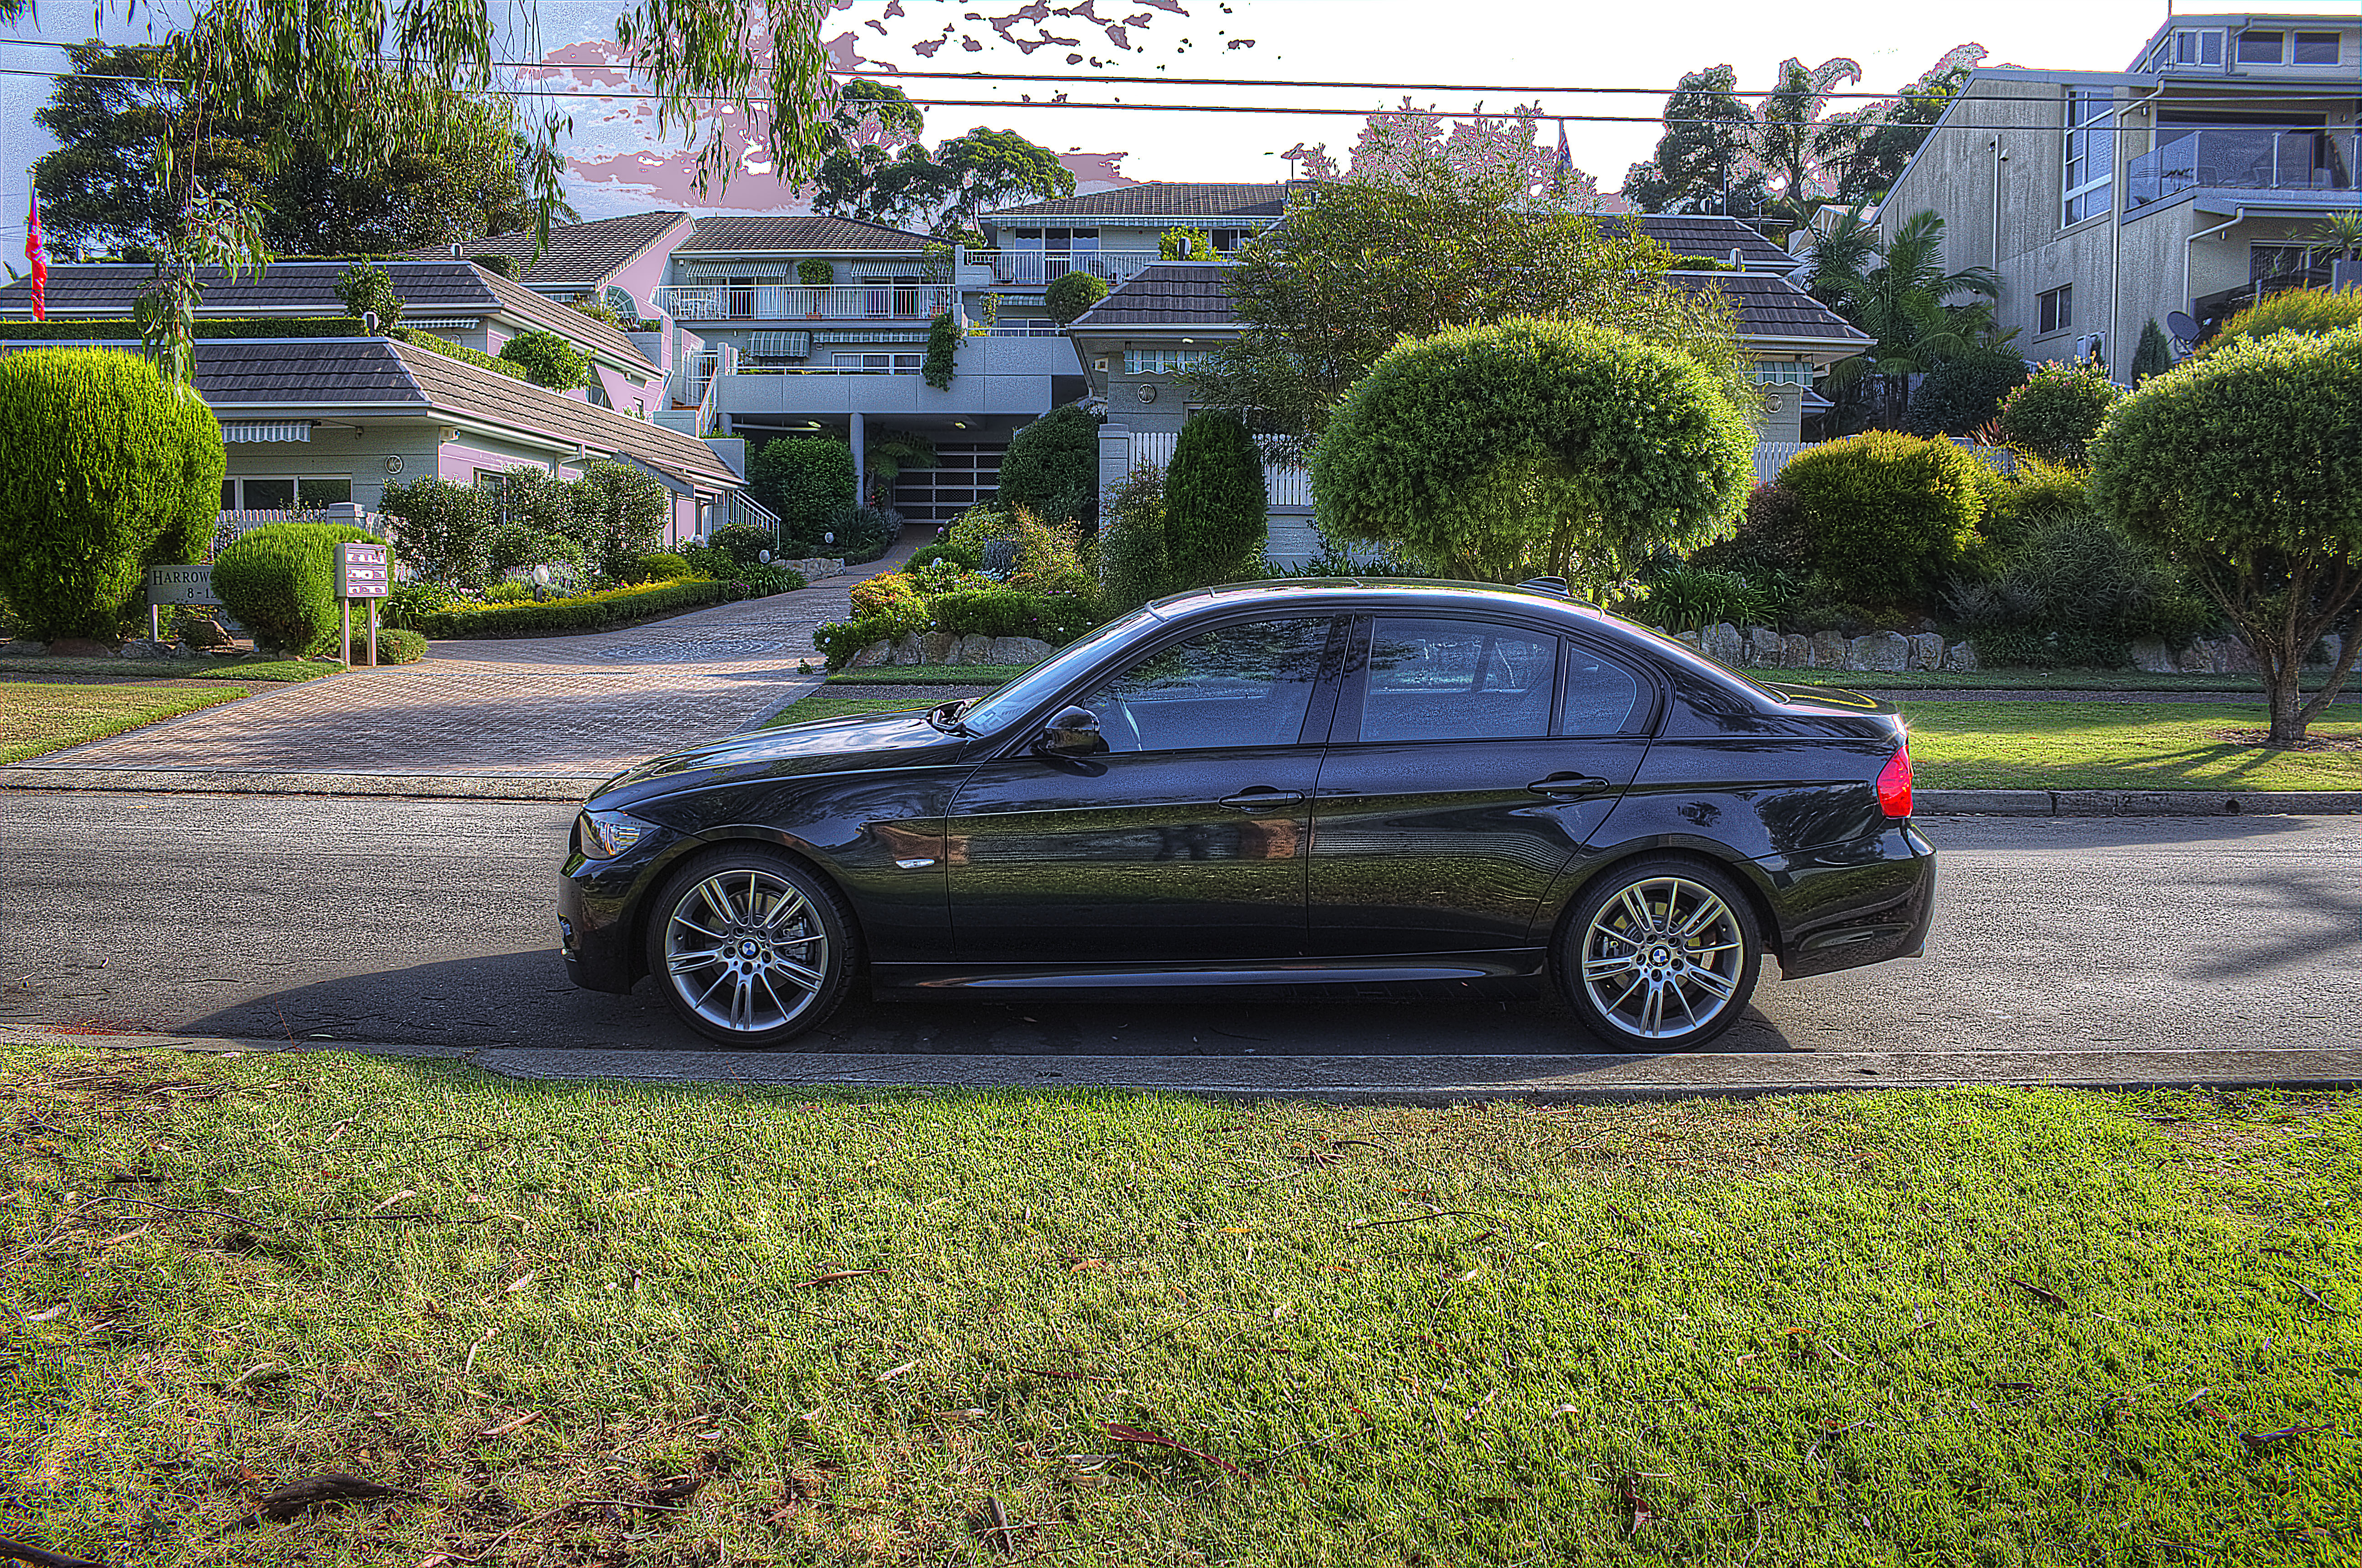 BMW 325i M Sport - HDR | Flickr - Photo Sharing!